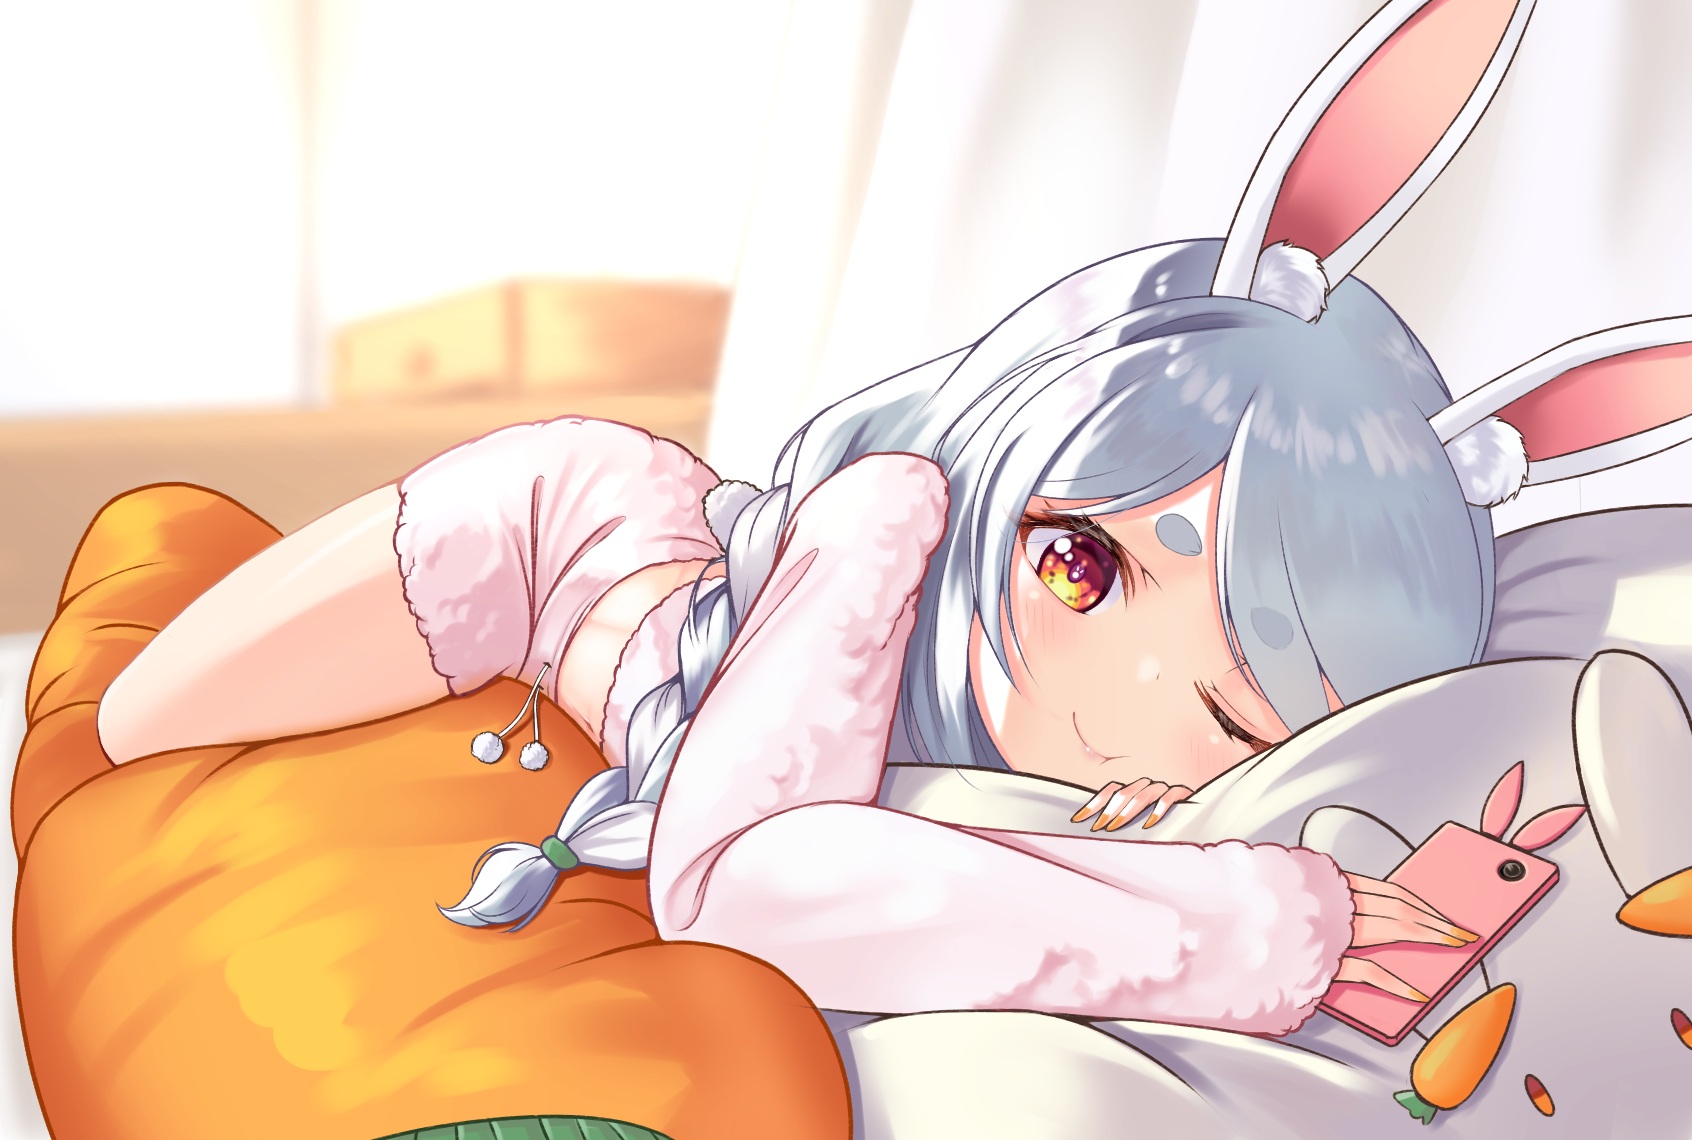 Anime Anime Girls Bunny Ears Bunny Girl One Eye Closed Lying Down Smartphone Long Hair Smiling Paint 1692x1140